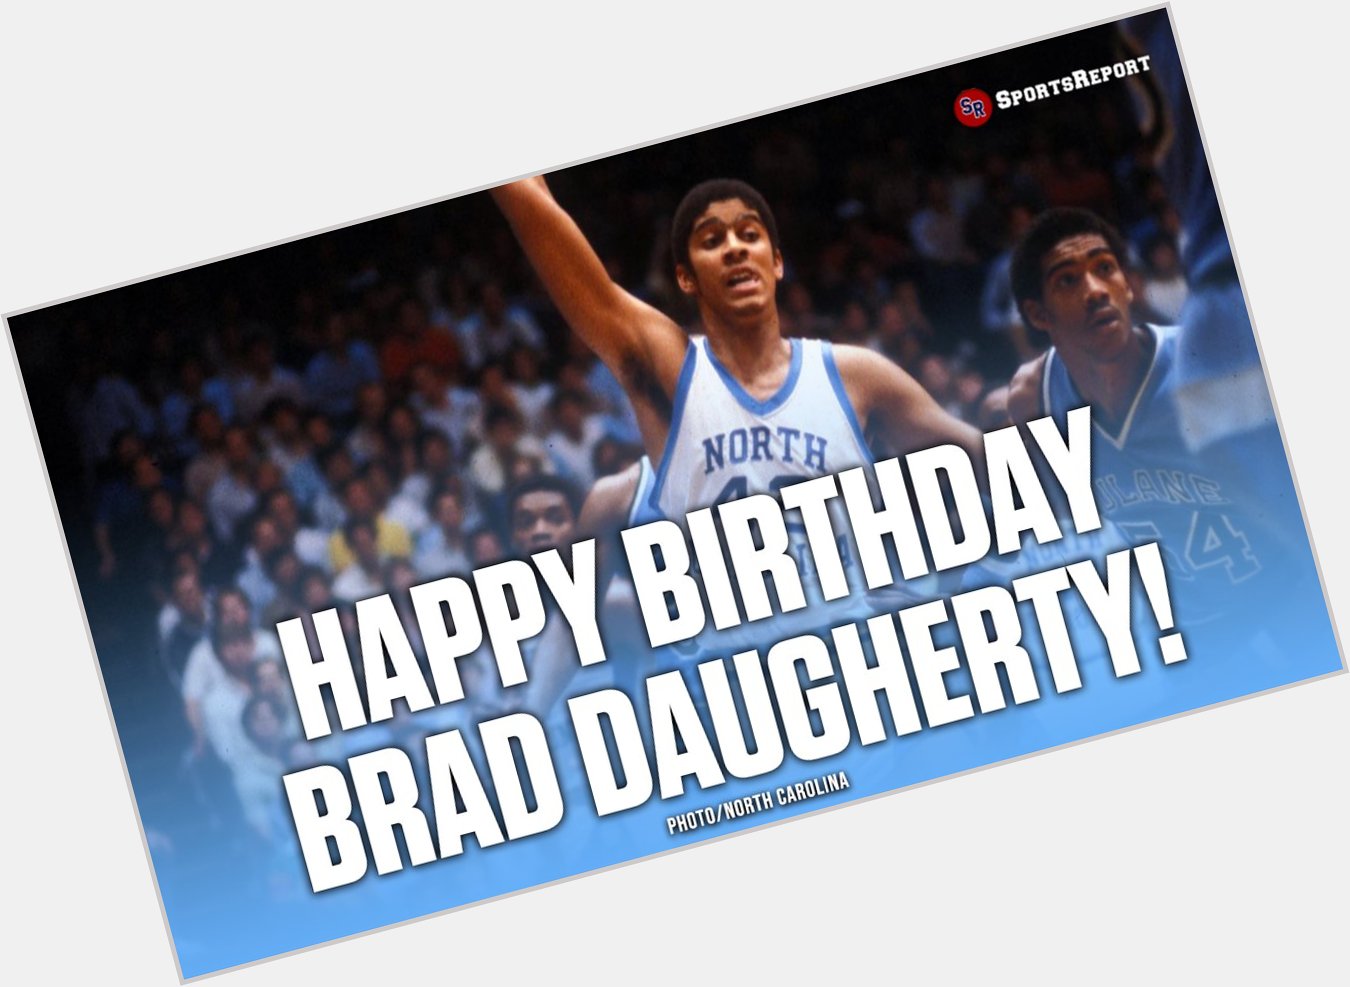  Fans, let\s wish legend Brad Daugherty a Happy Birthday! GO 